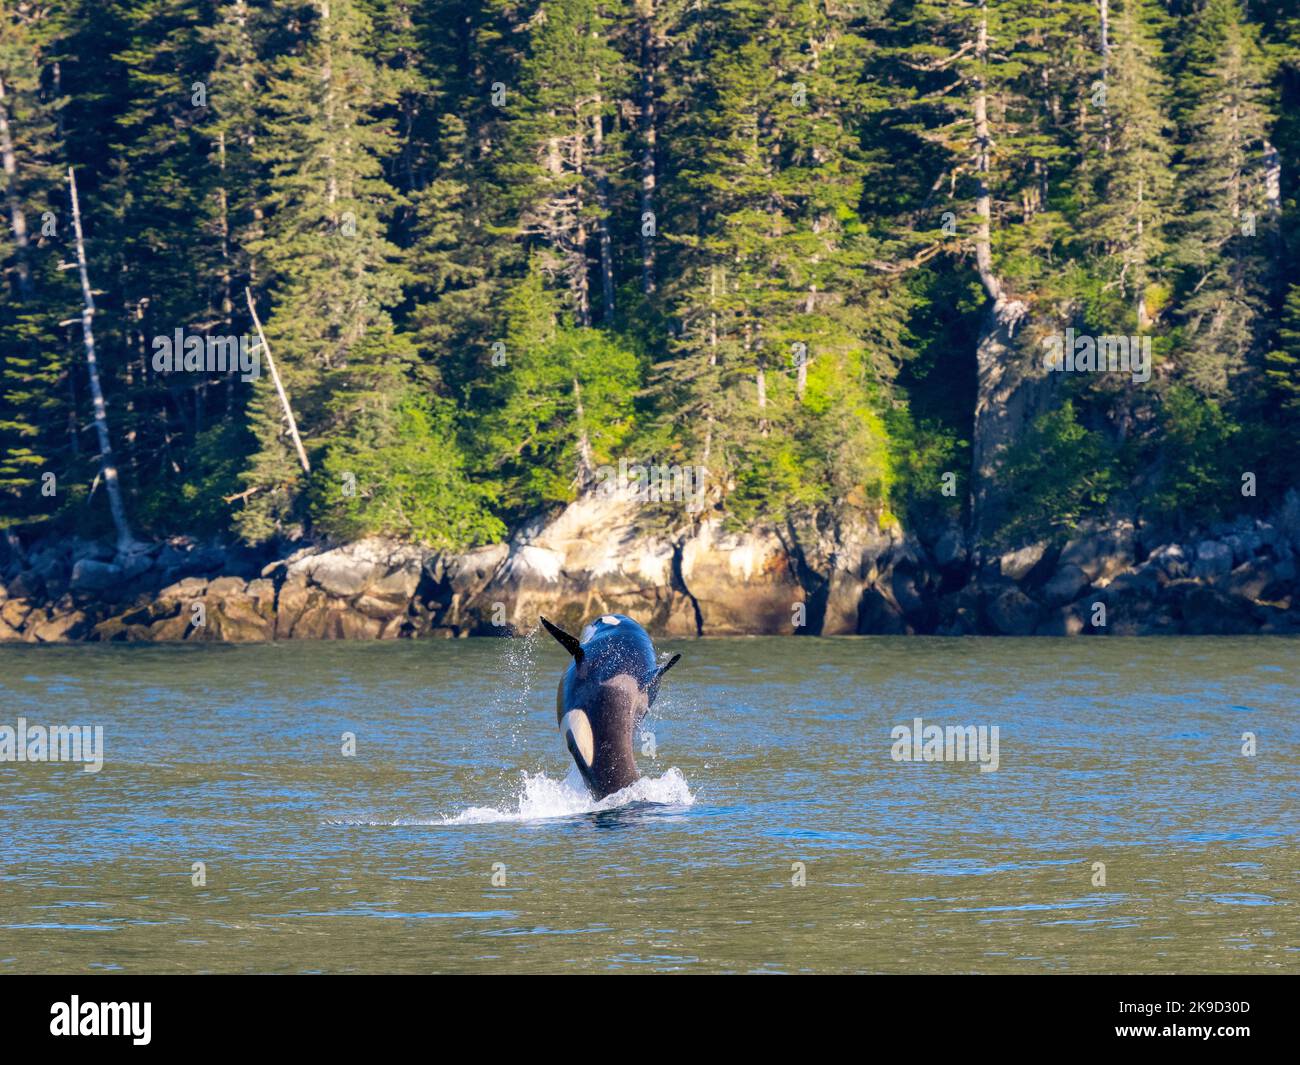 Orca Breaching, Parc national de Kenai Fjords, près de Seward, Alaska. Banque D'Images